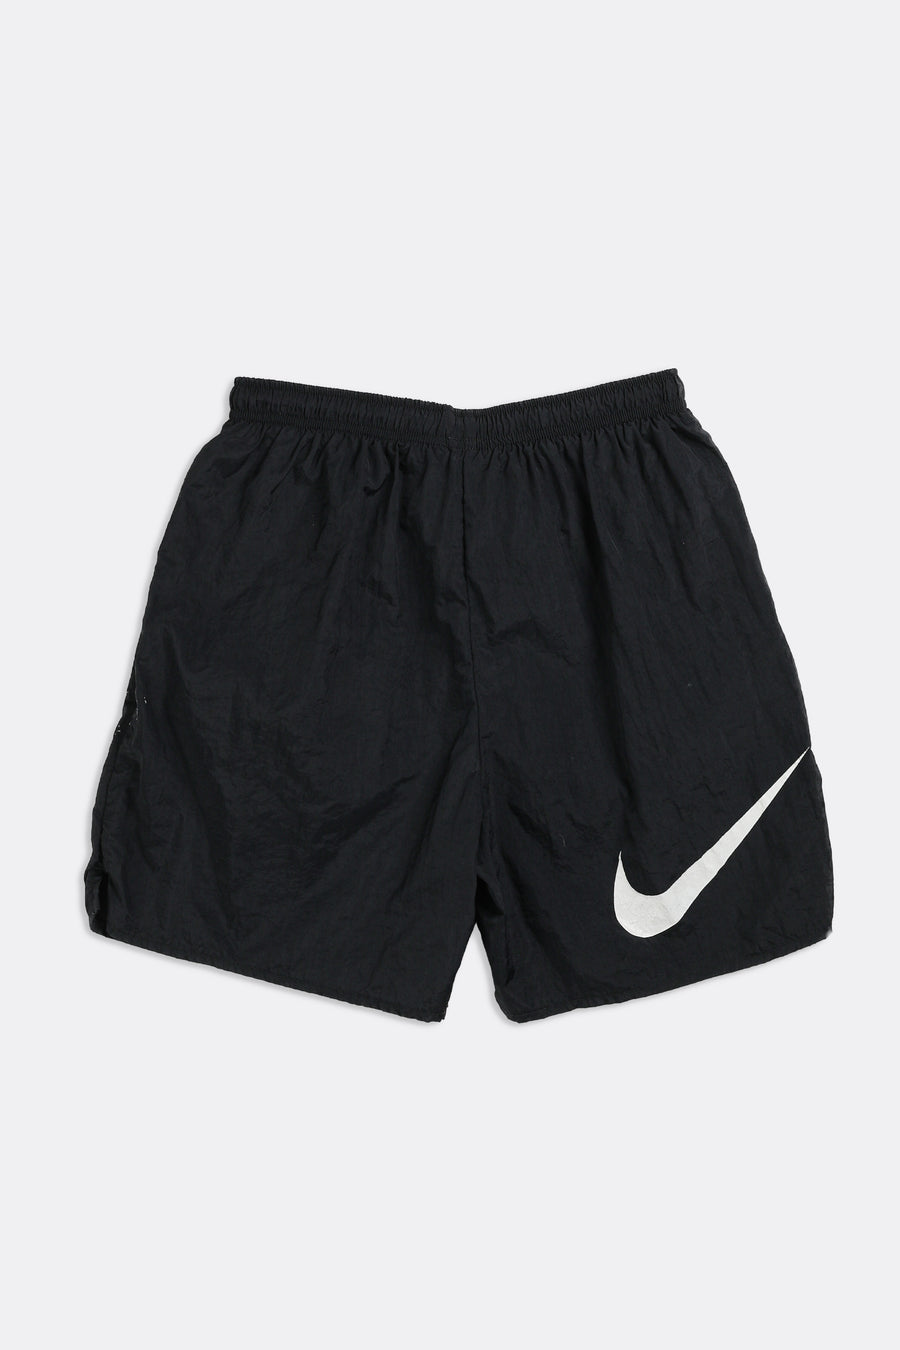 Vintage Nike Windbreaker Shorts - S